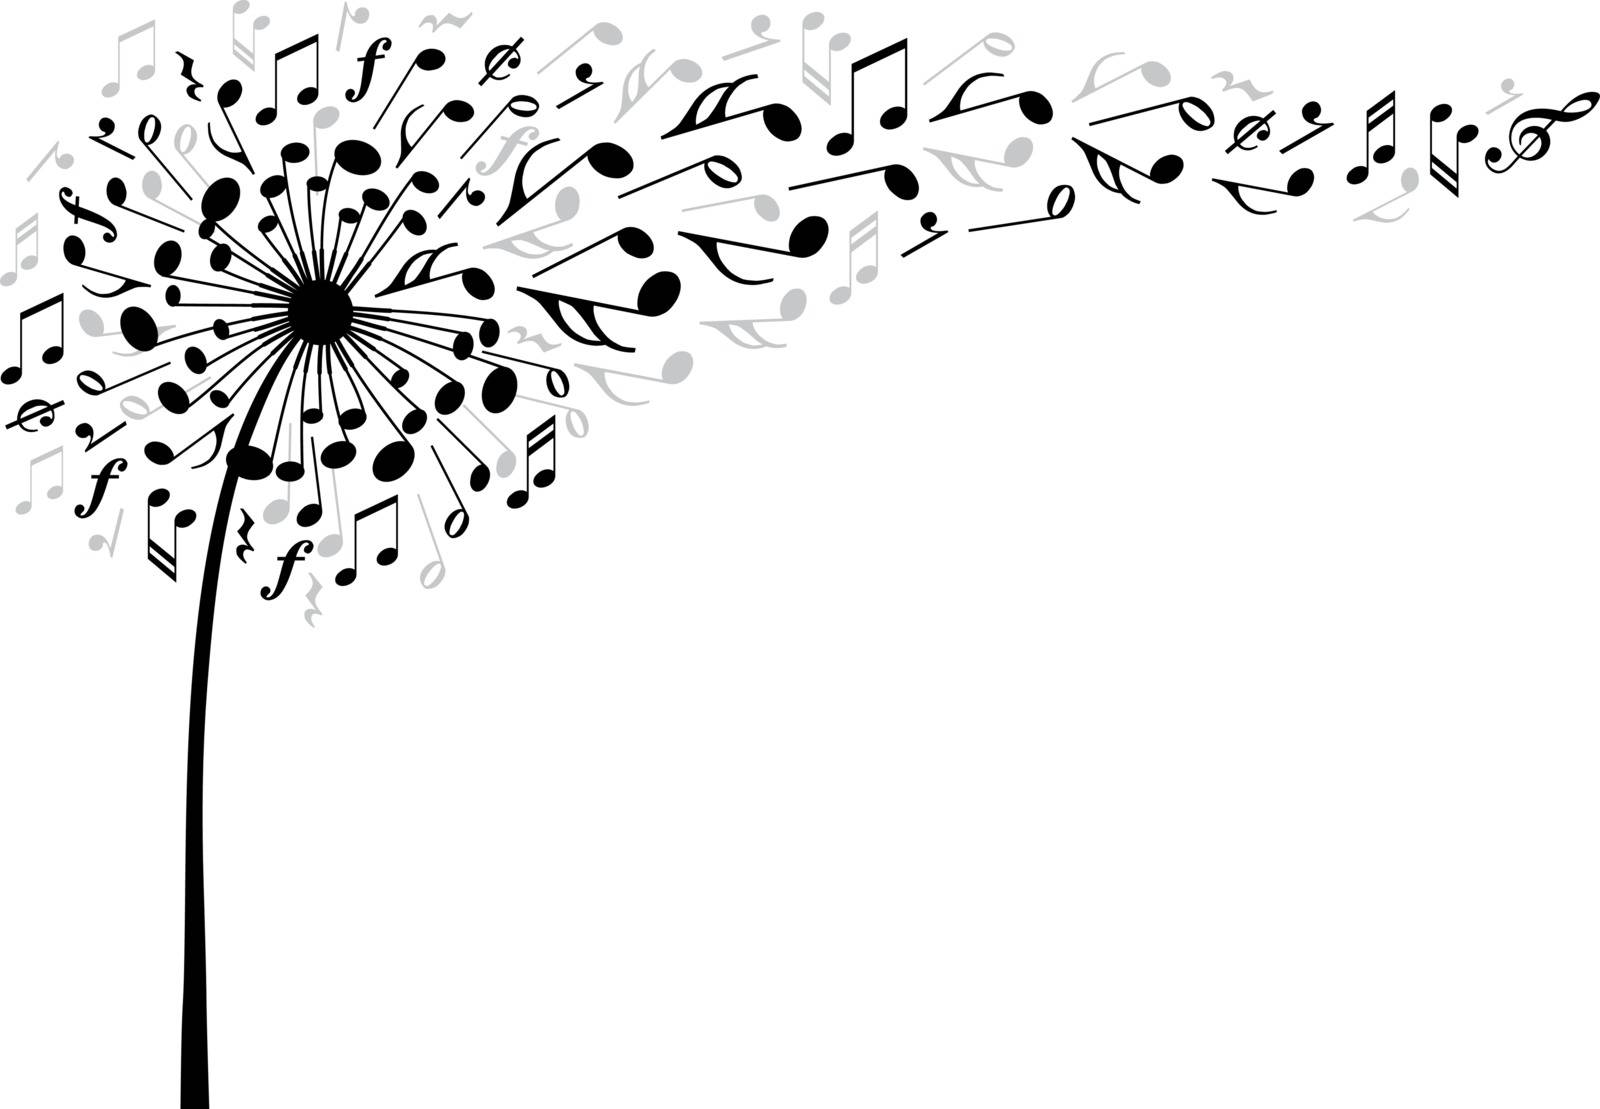 music dandelion flower with flying musical notes, vector illustration